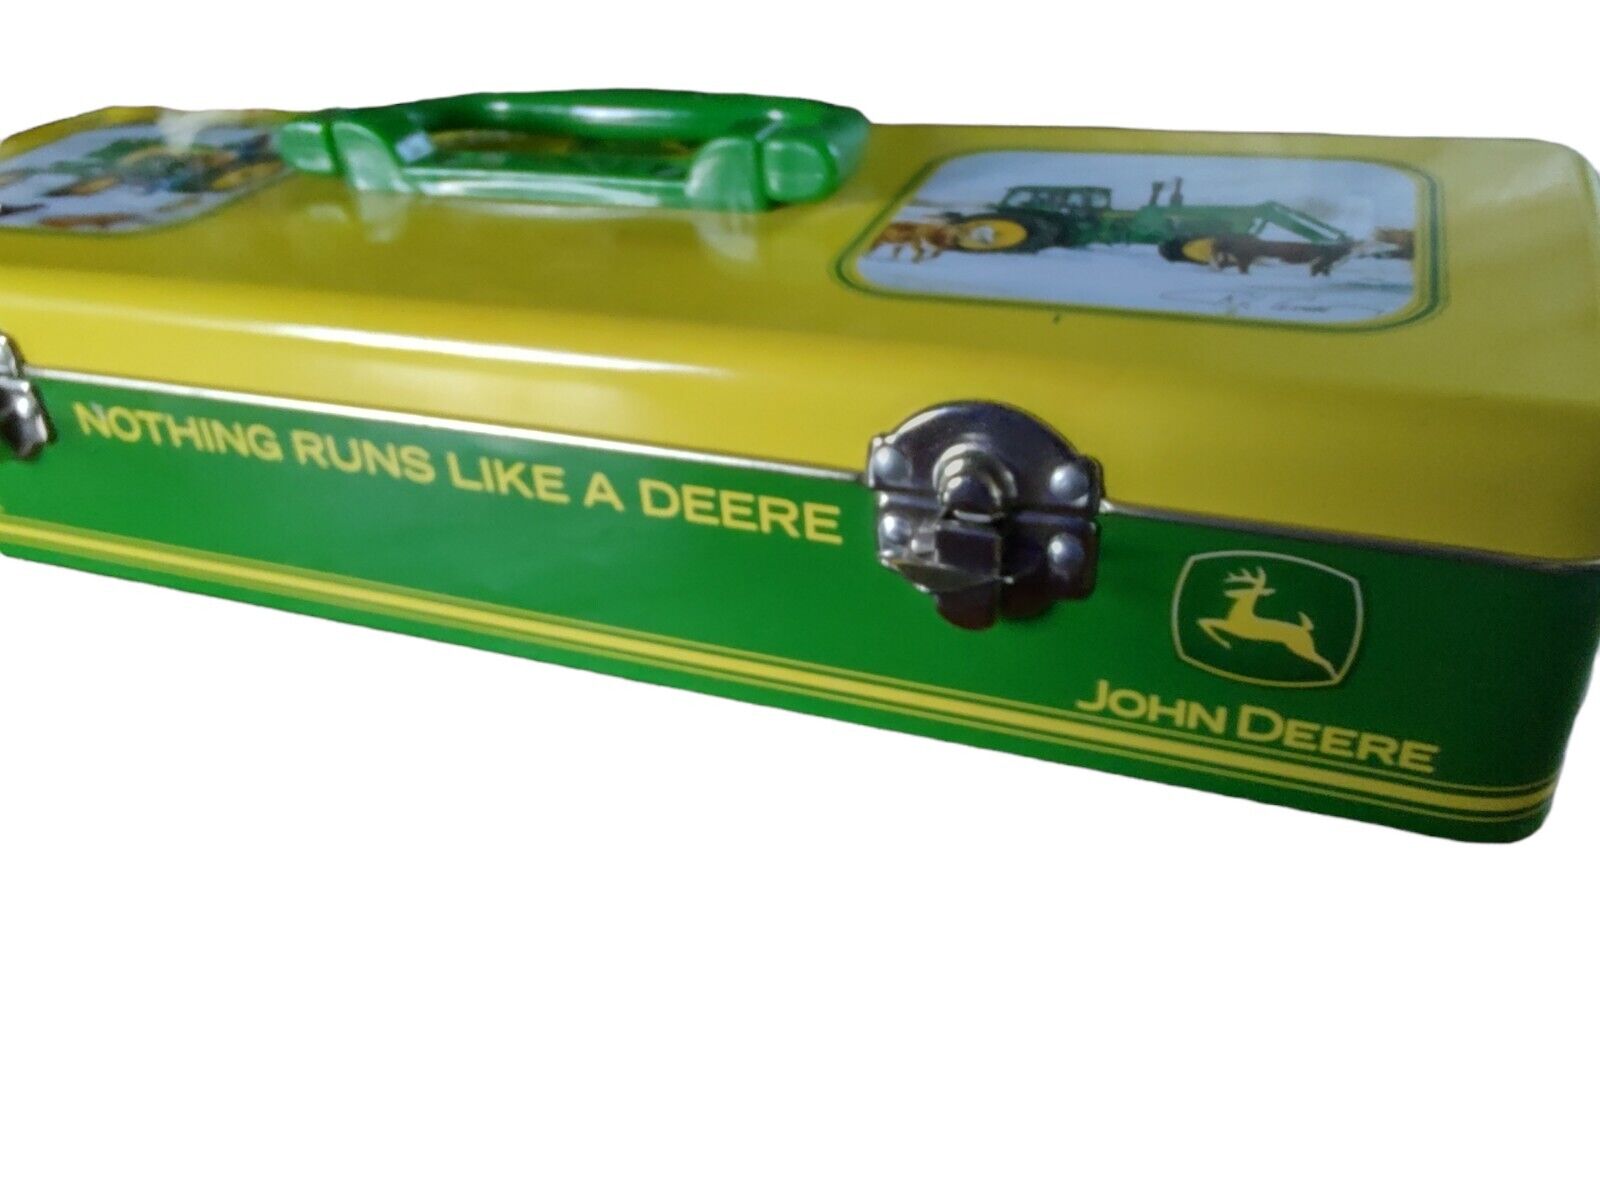 John Deere Tin Box 11.5x4 inch Nothing Runs Like A Deere Tractor Yellow Green